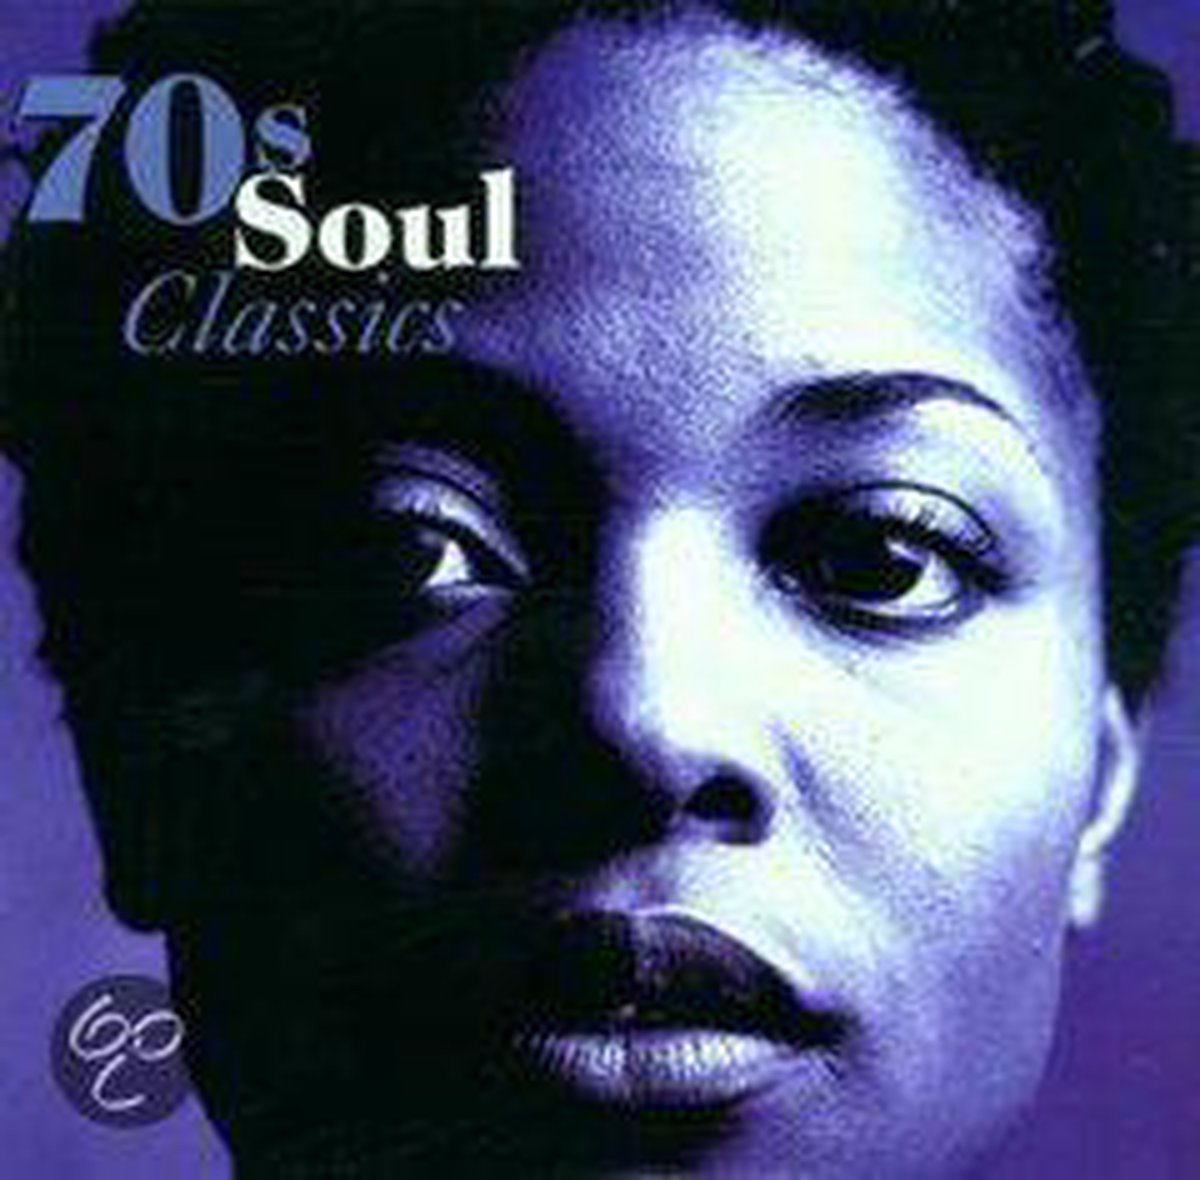 70's Soul Classics - various artists